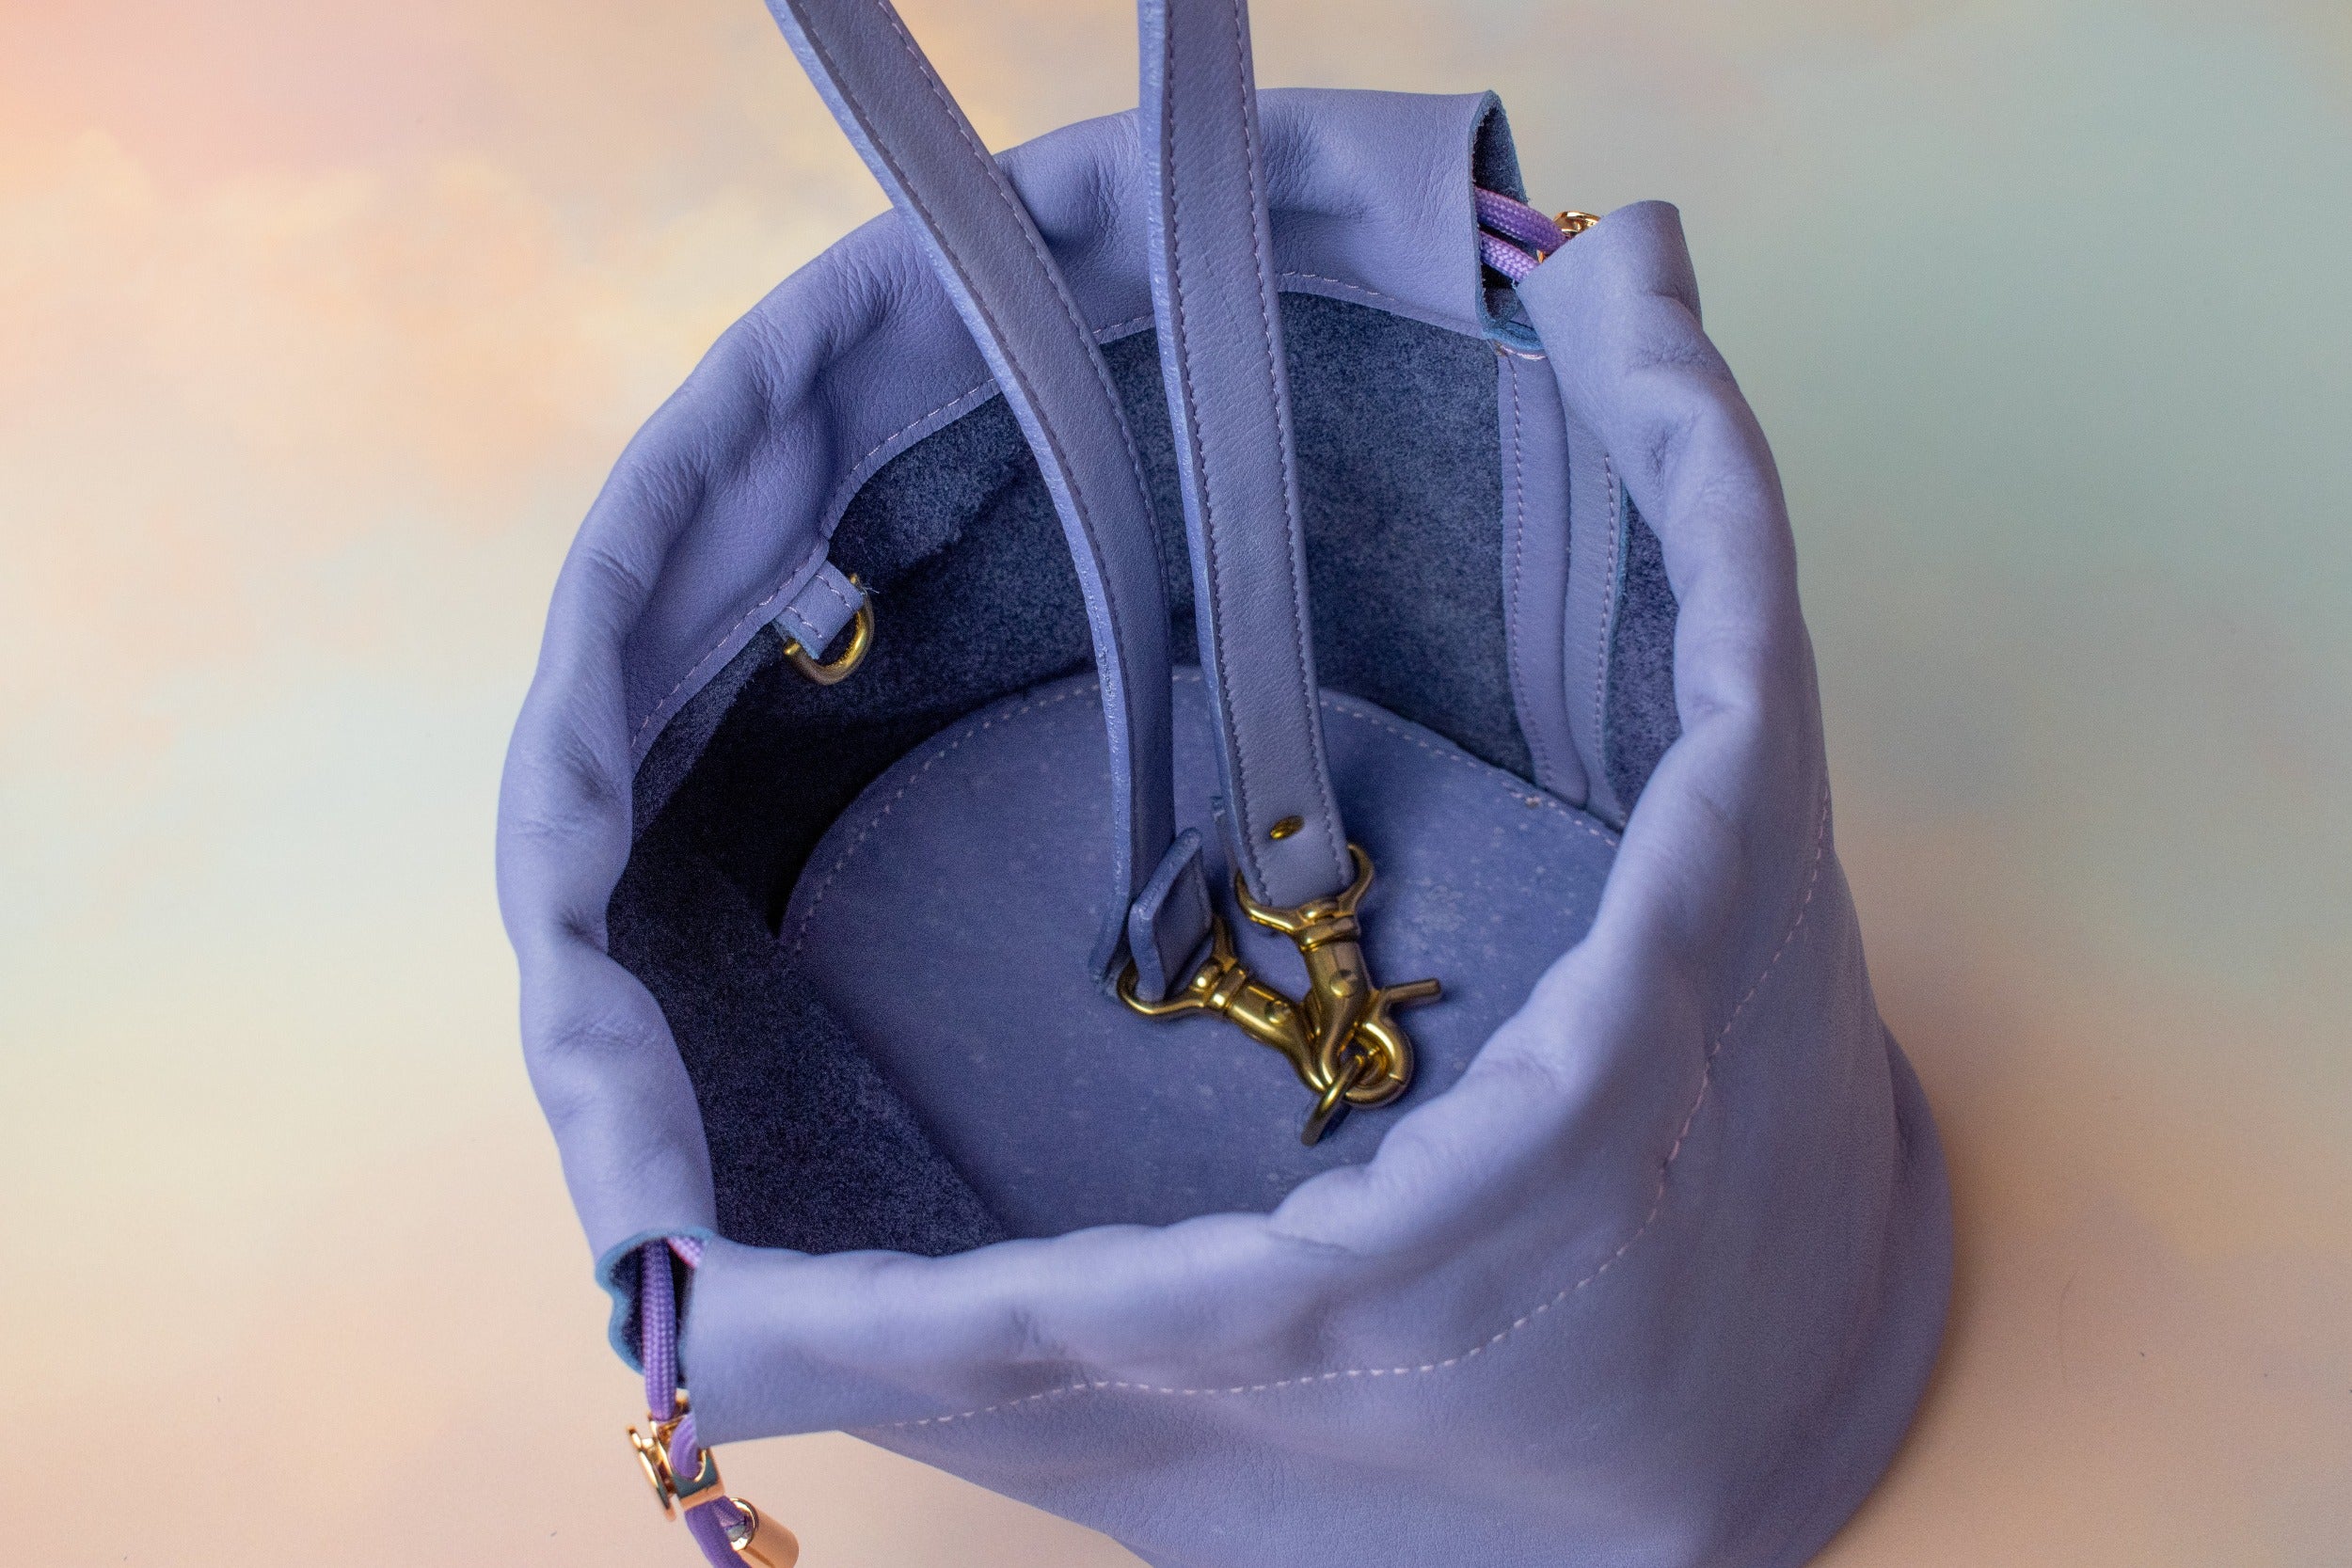 interior of 90s nickelodeon purple leather handbag with adjustable clasp